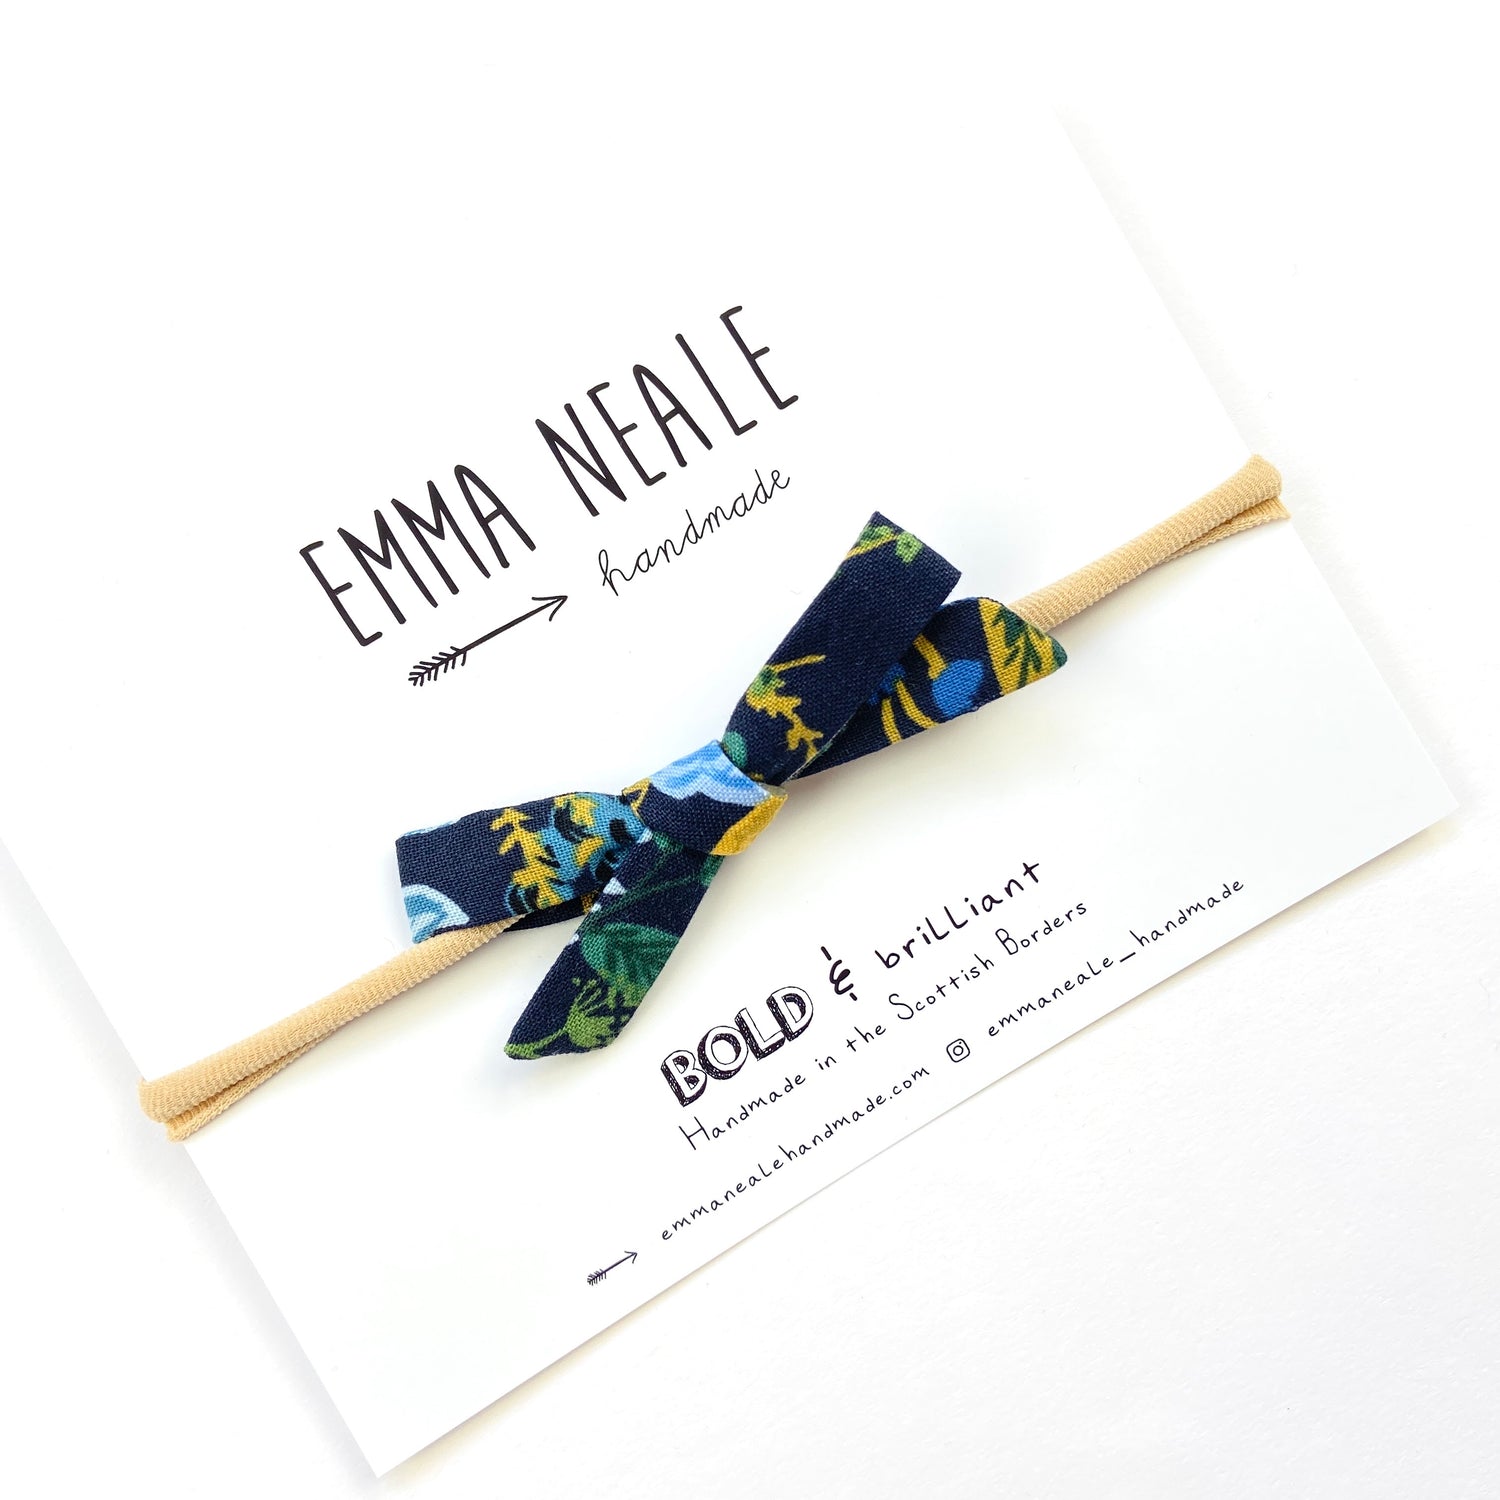 Floral Vines Orla Bow Headband - Emma Neale Handmade